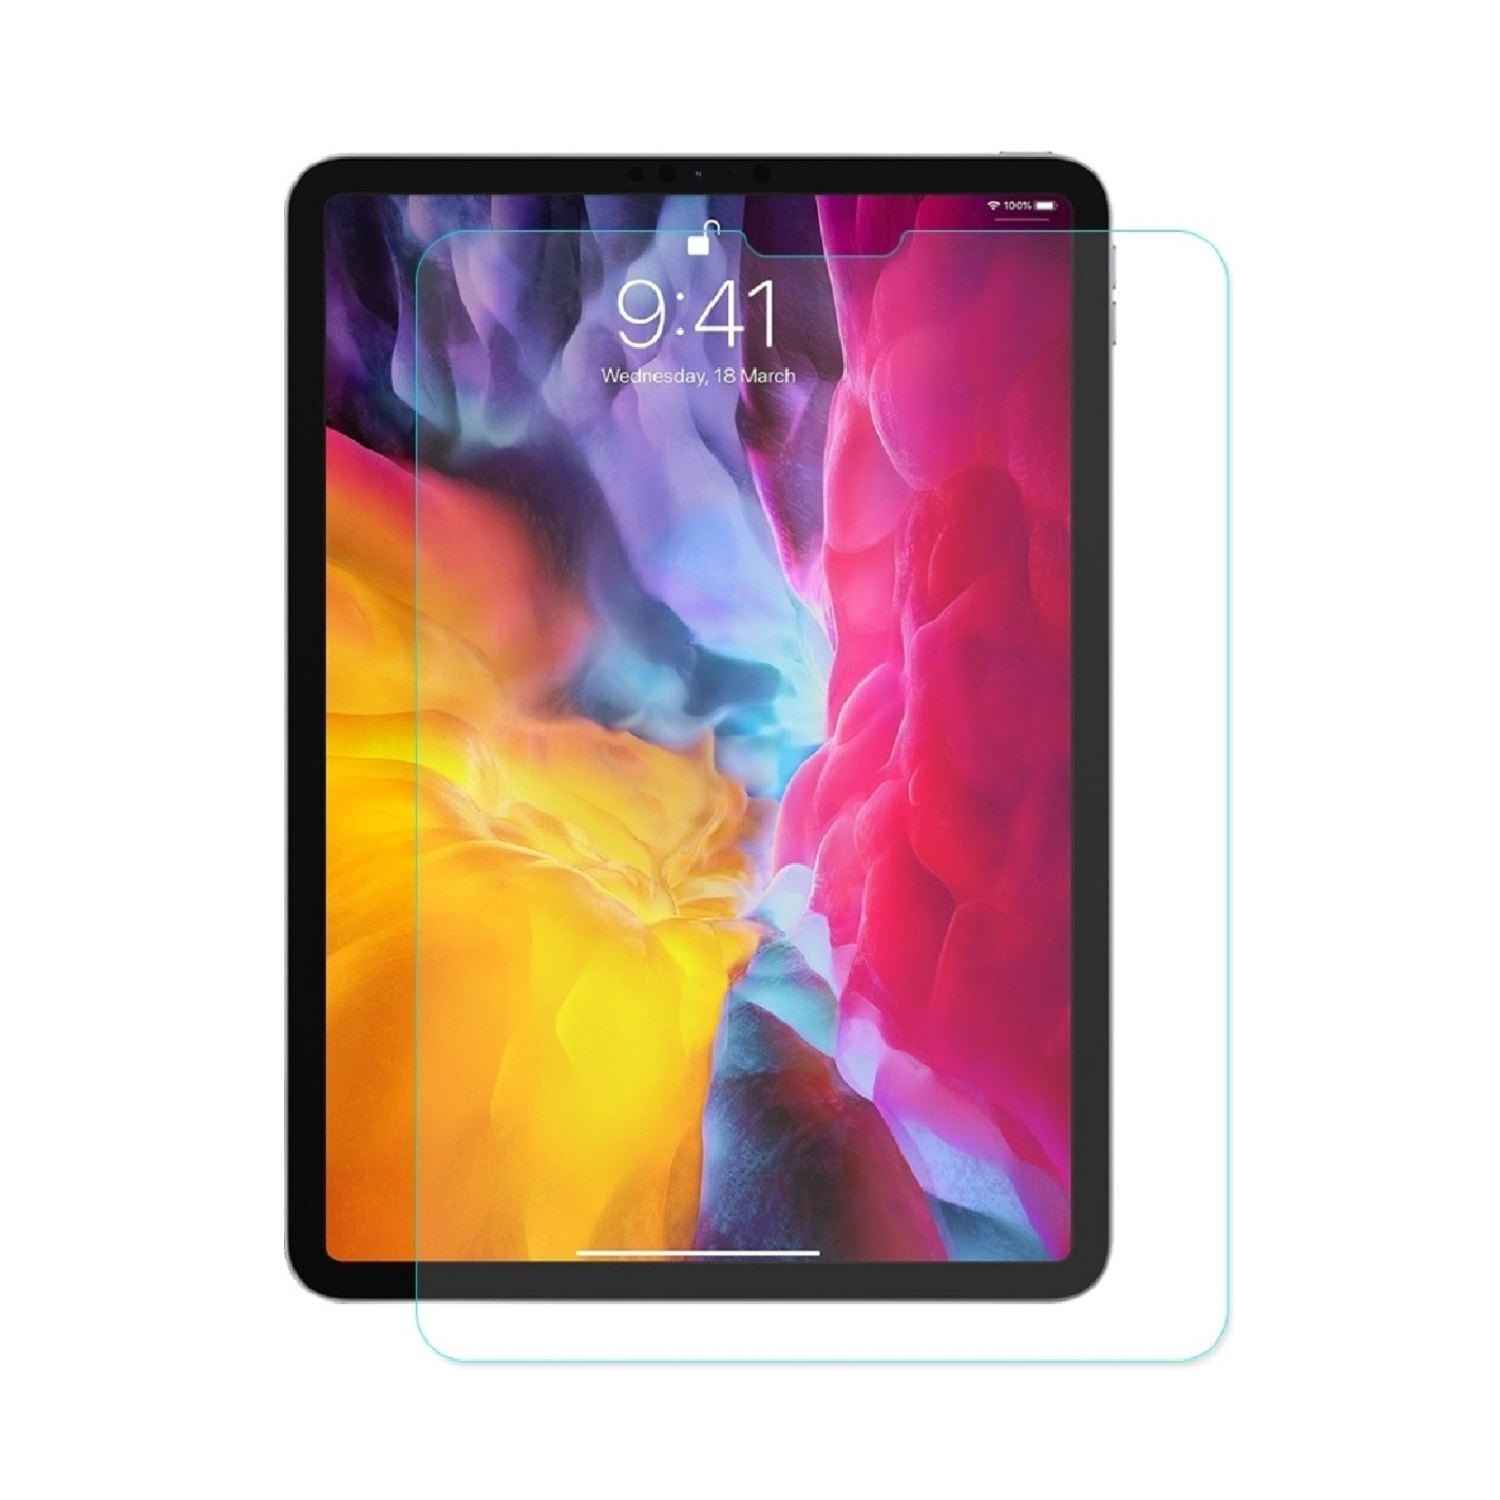 Displayschutzfolie(für 2022) 2018 Displayschutzfolie 12.9 iPad PROTECTORKING Apple HD 6x Schutzfolie KLAR Pro 2019 2020